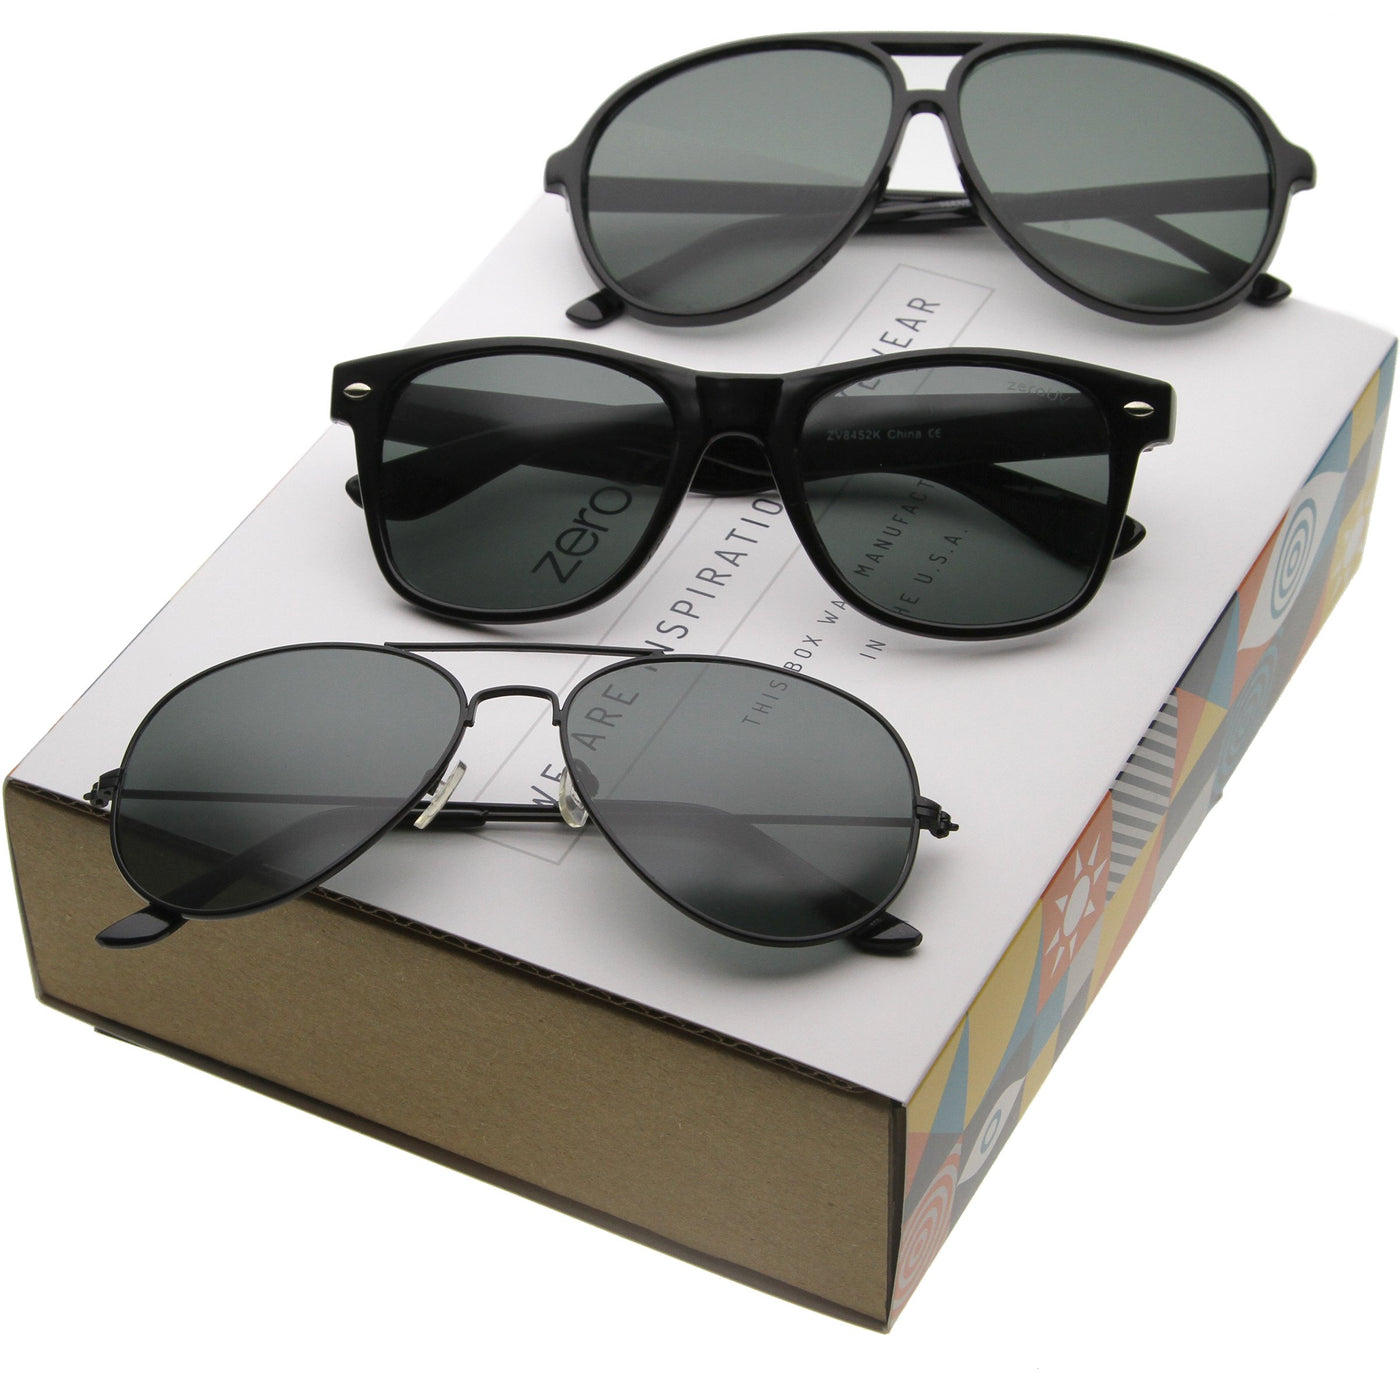 Sale clearance sunglasses - zeroUV